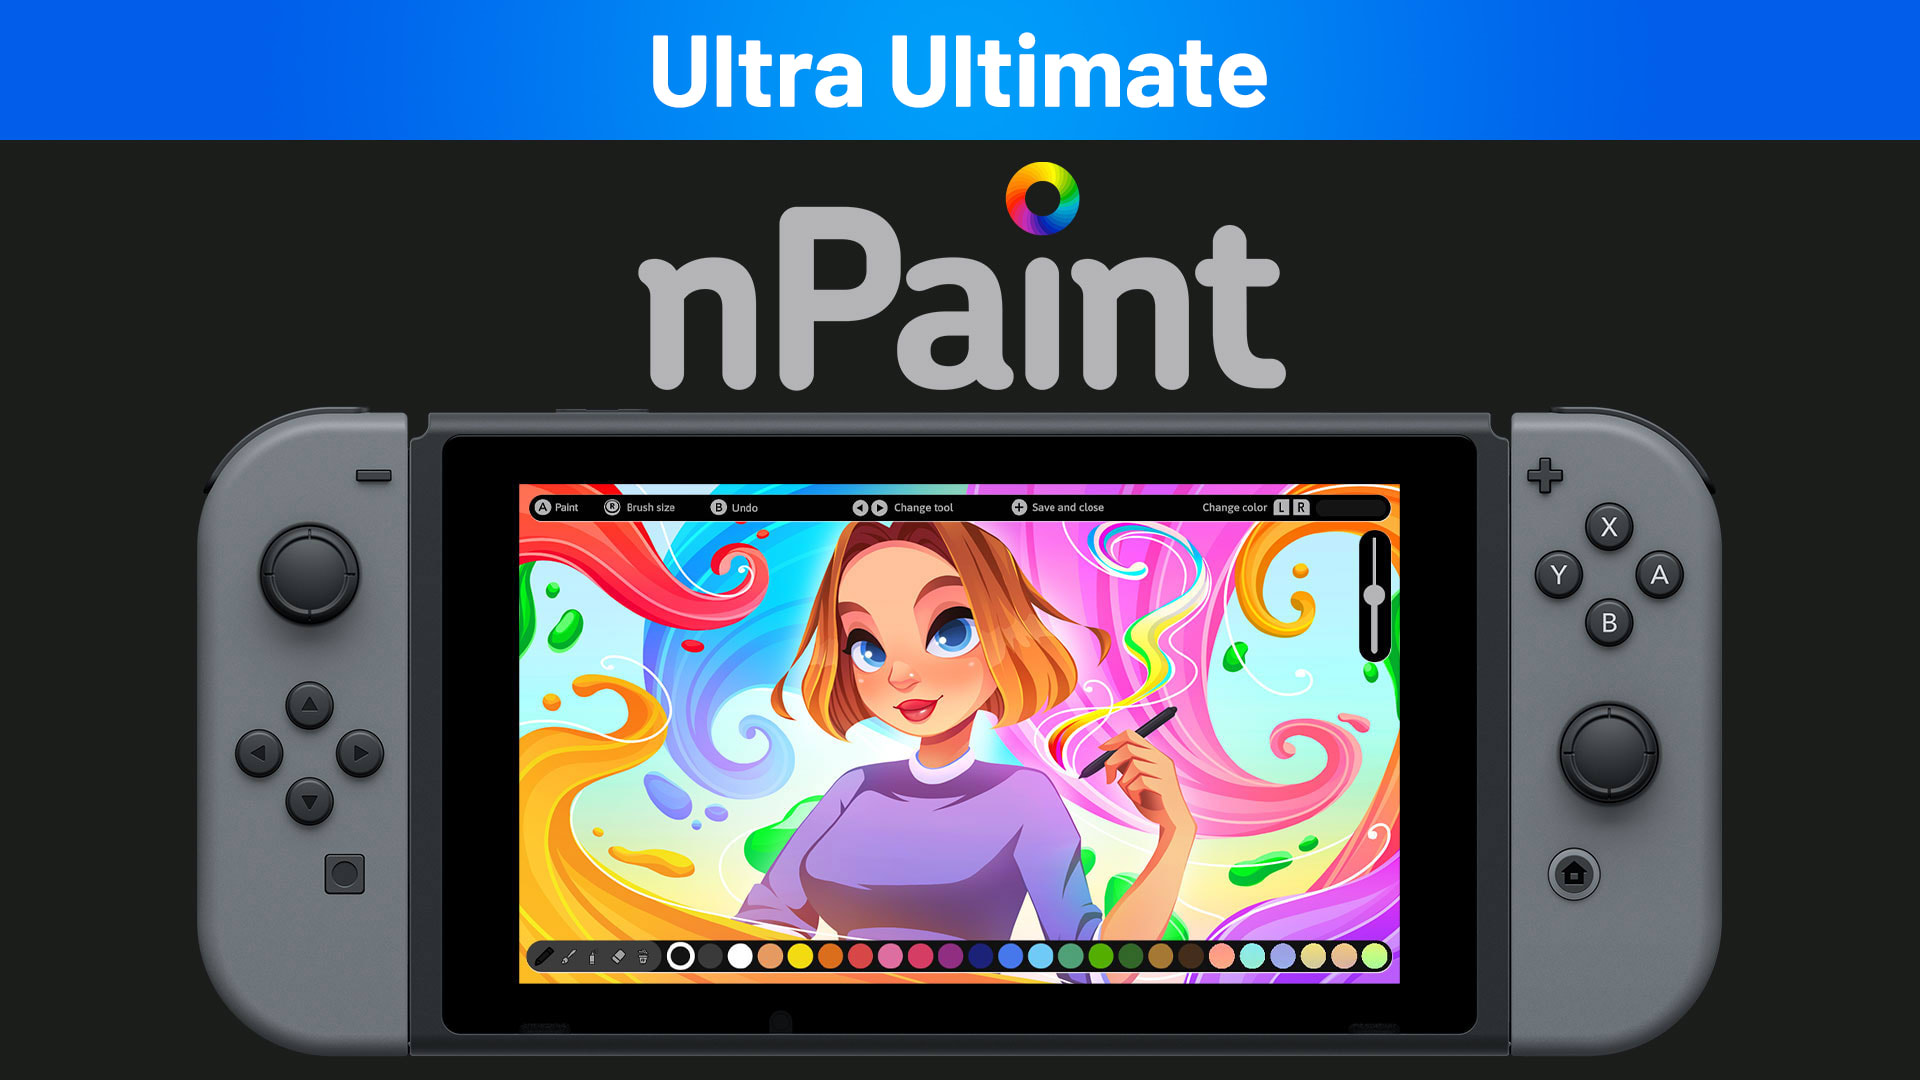 nPaint Ultra Ultimate 1